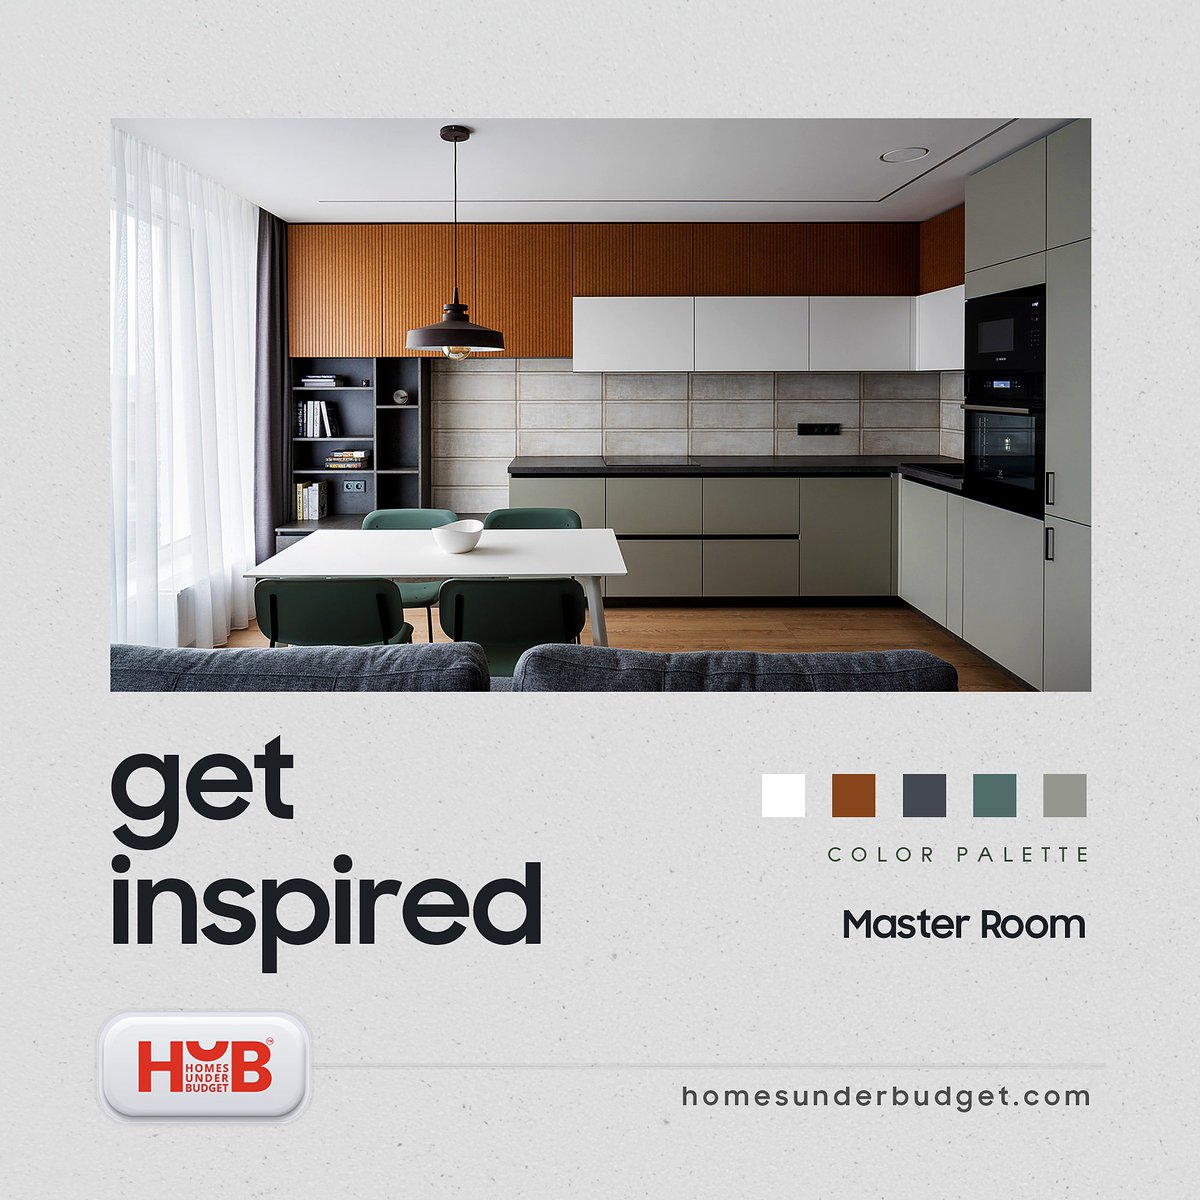 Get Inspired!

#HomesUnderBudget #HomeInteriors #interiordesign #design #interior #homedecor #home #decor #KitchenInteriors #ModularKitchen twitter.com/messages/compo…